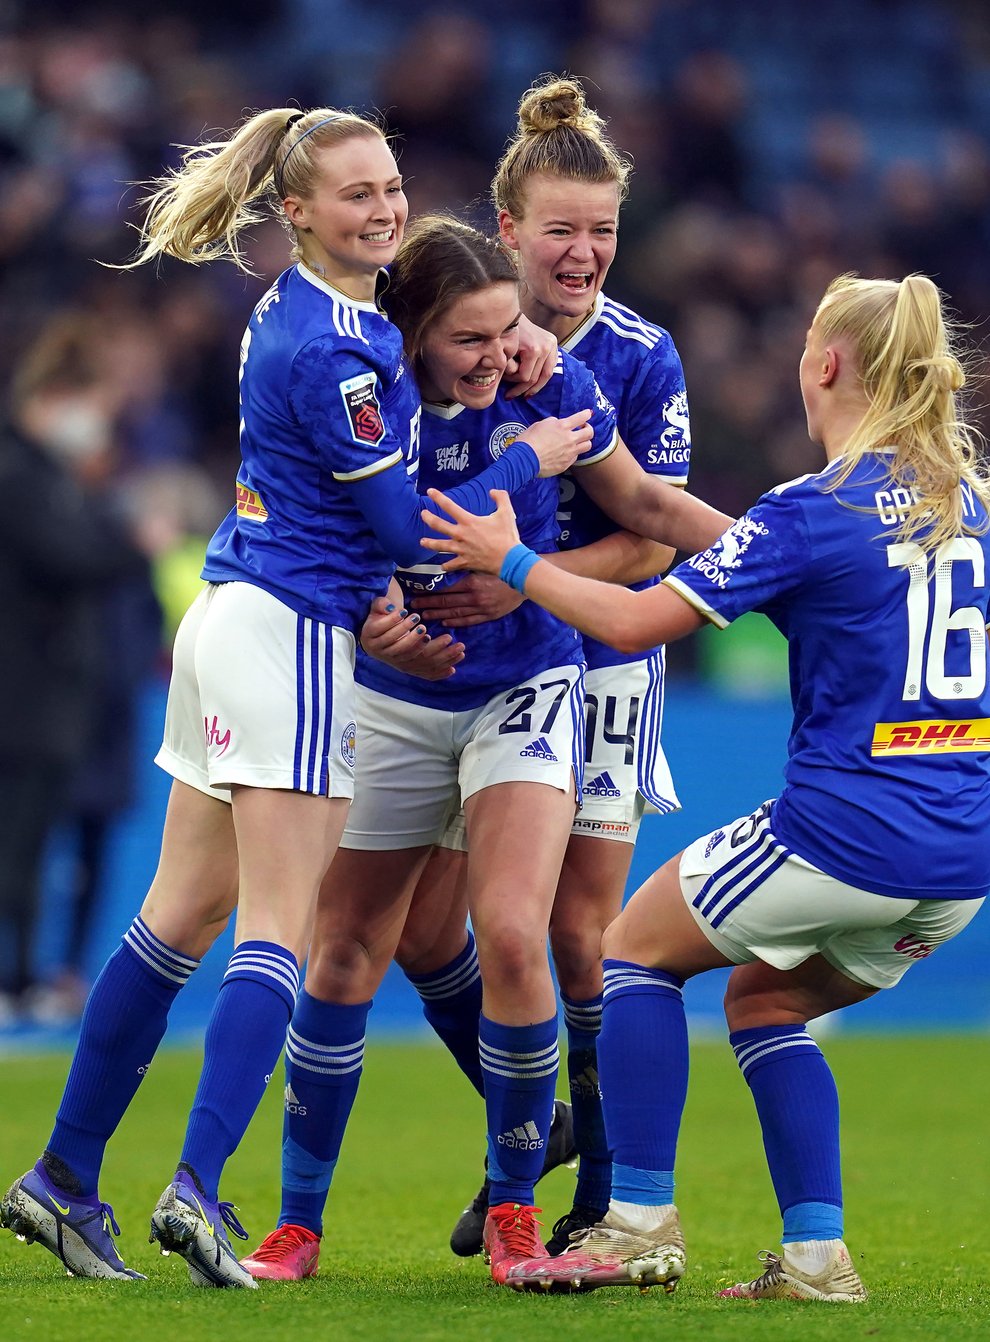 Leicester City’s Shannon O’Brien celebrates scoring (Nick Potts/PA)